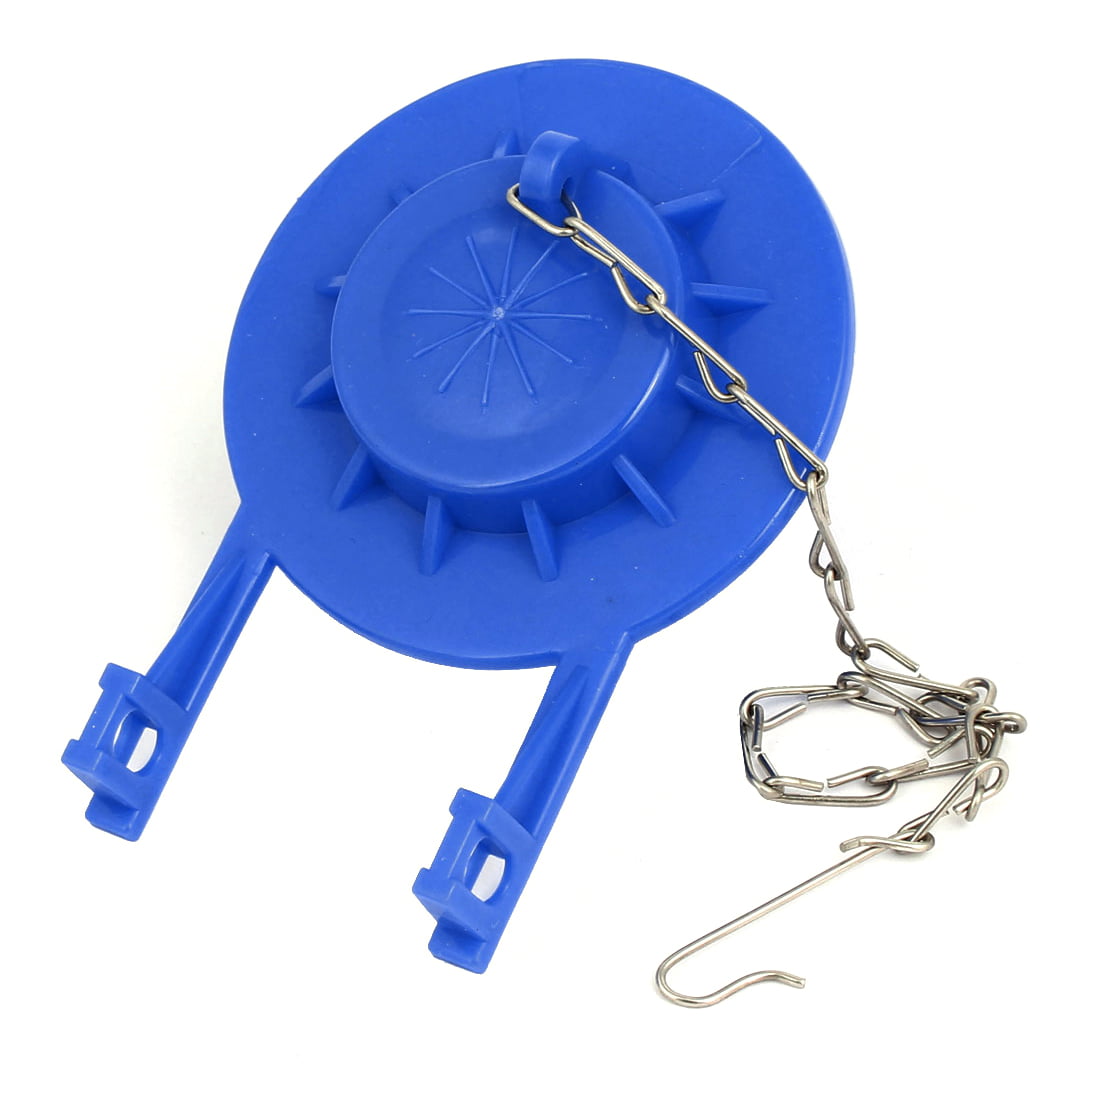 Adjustable Toilet Tank Water Saver Flapper Repair Part Supplies Blue TCEA 